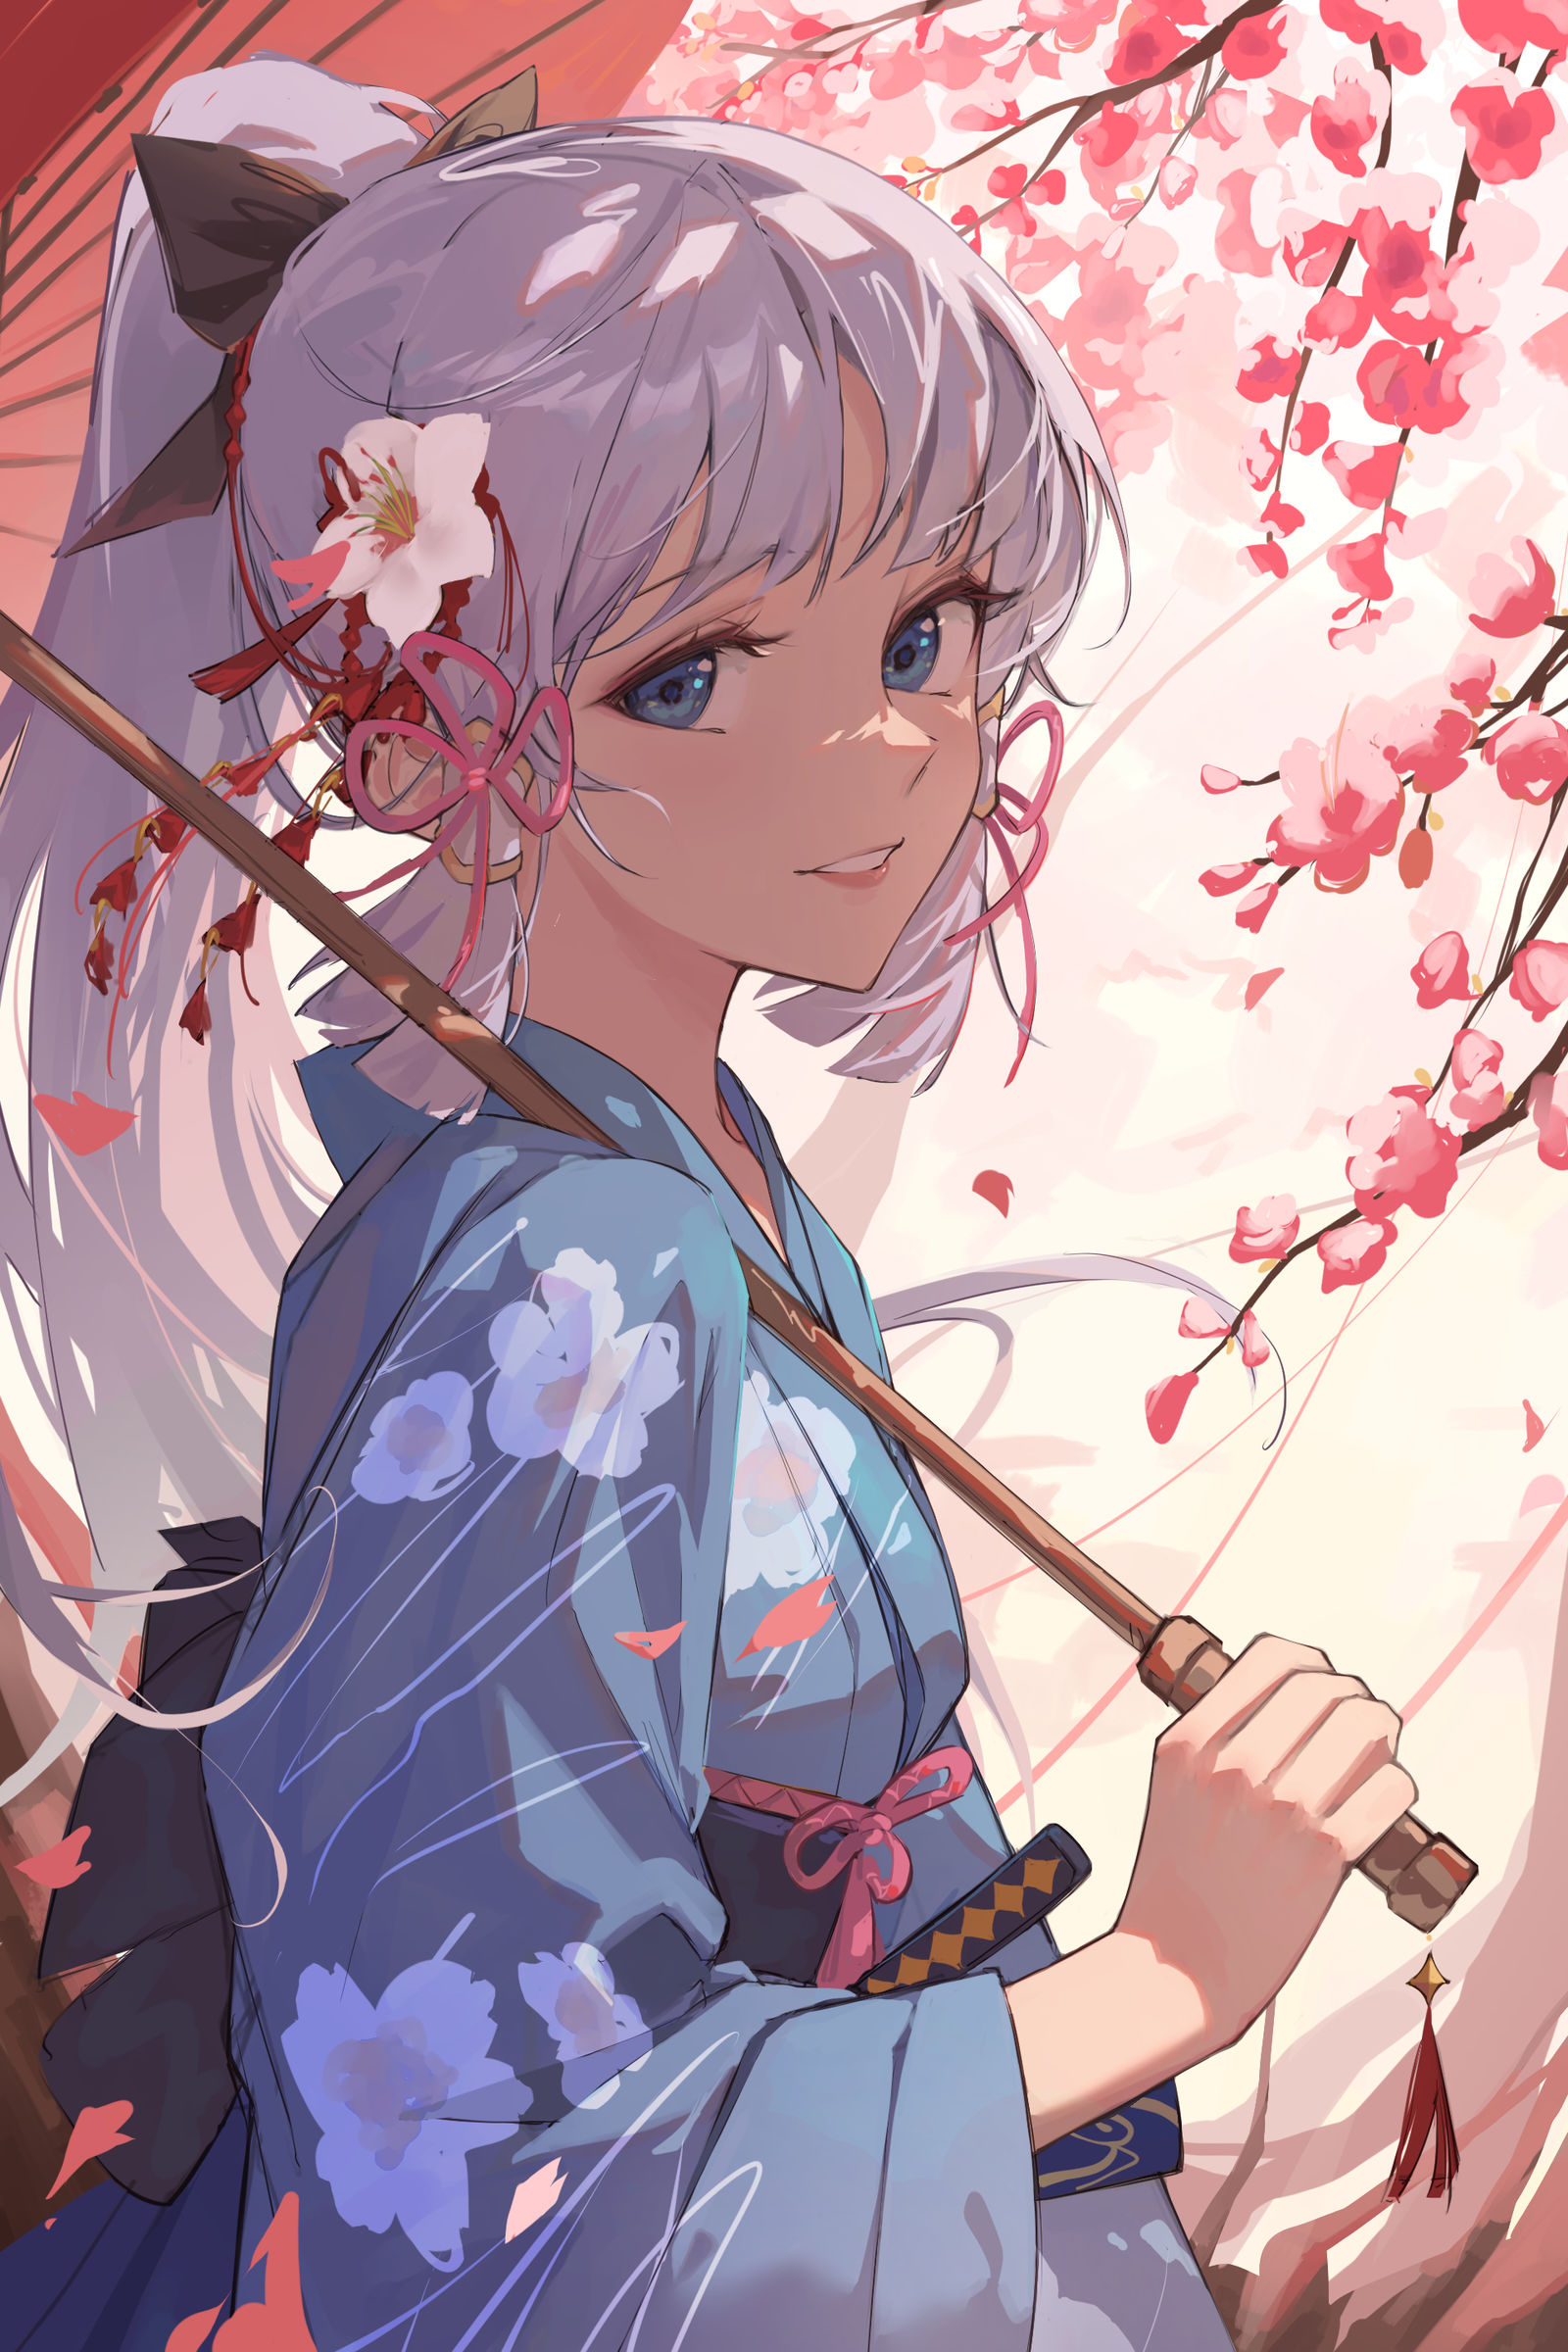 Kimono Ayaka插画图片壁纸